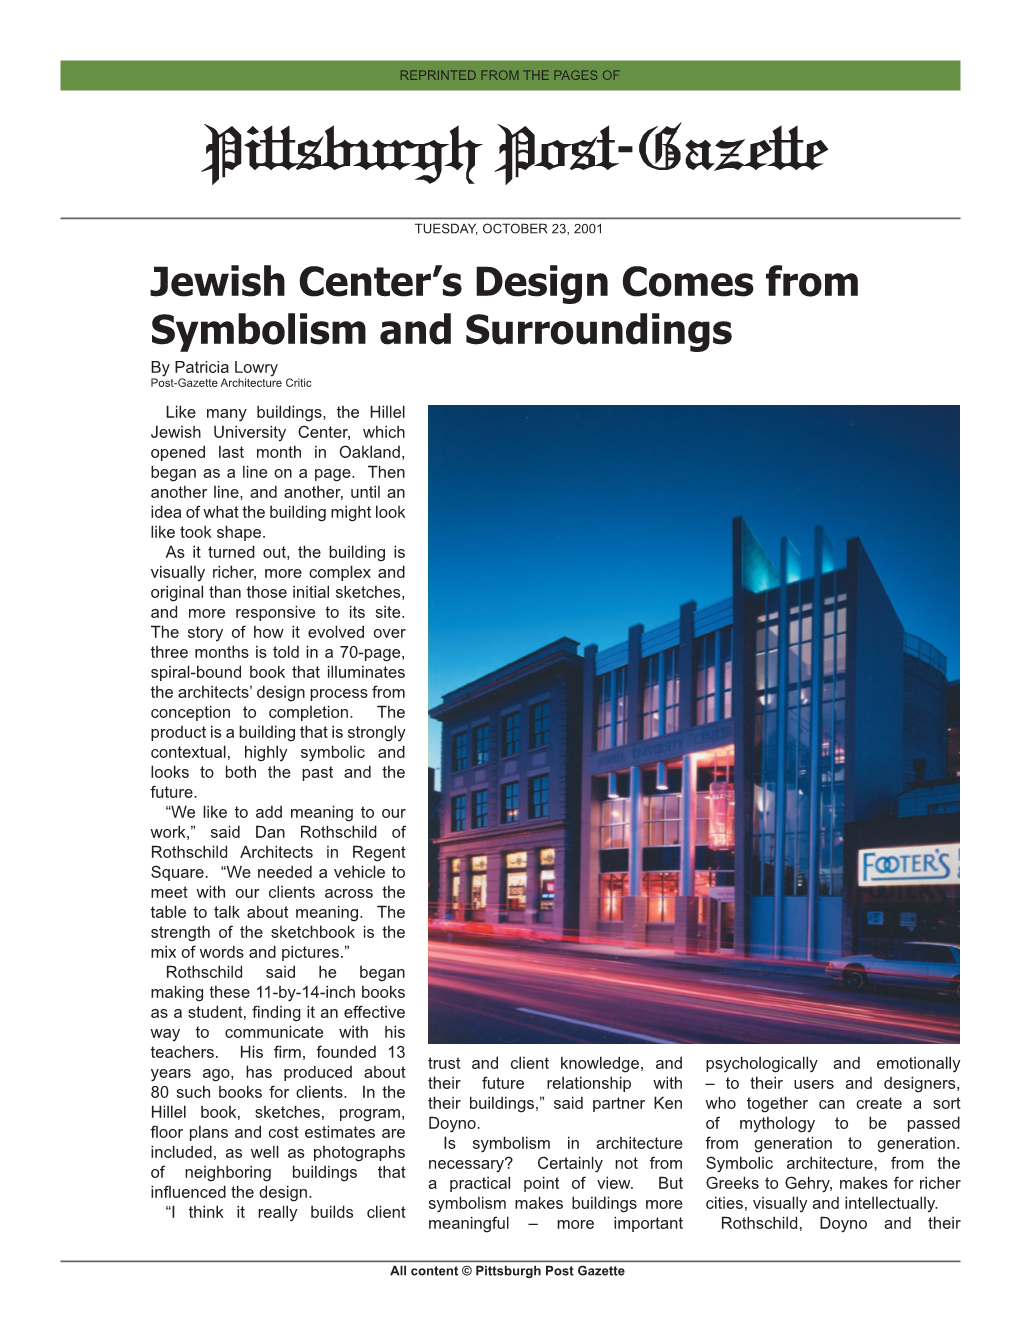 Pittsburgh Post-Gazette Hillel Jewish University Center's Design Comes